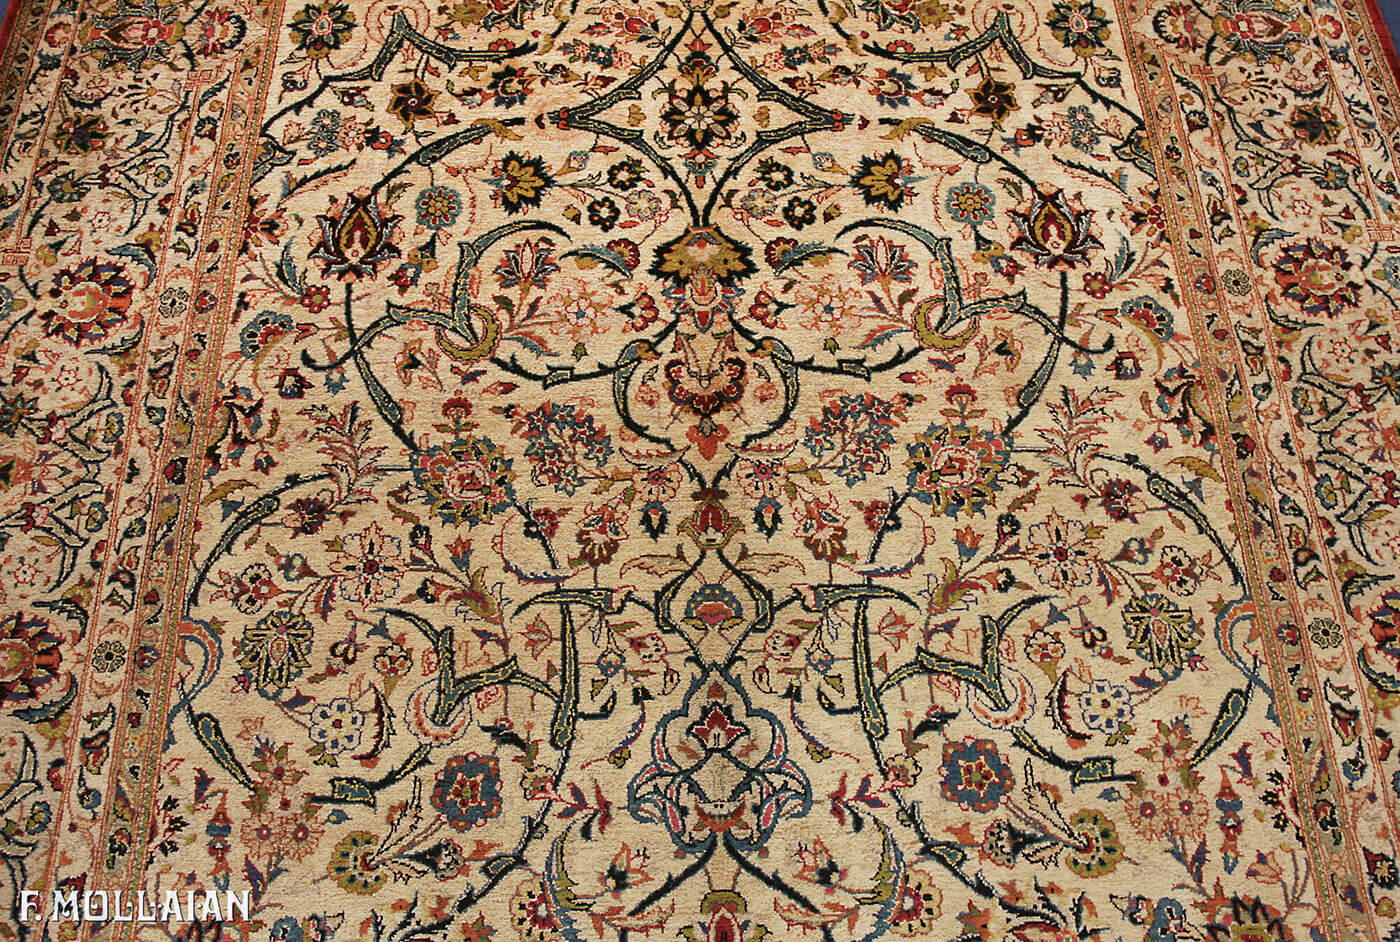 Pair of Antique Persian Kashan Silk “Forutan” Rug n°:51755568